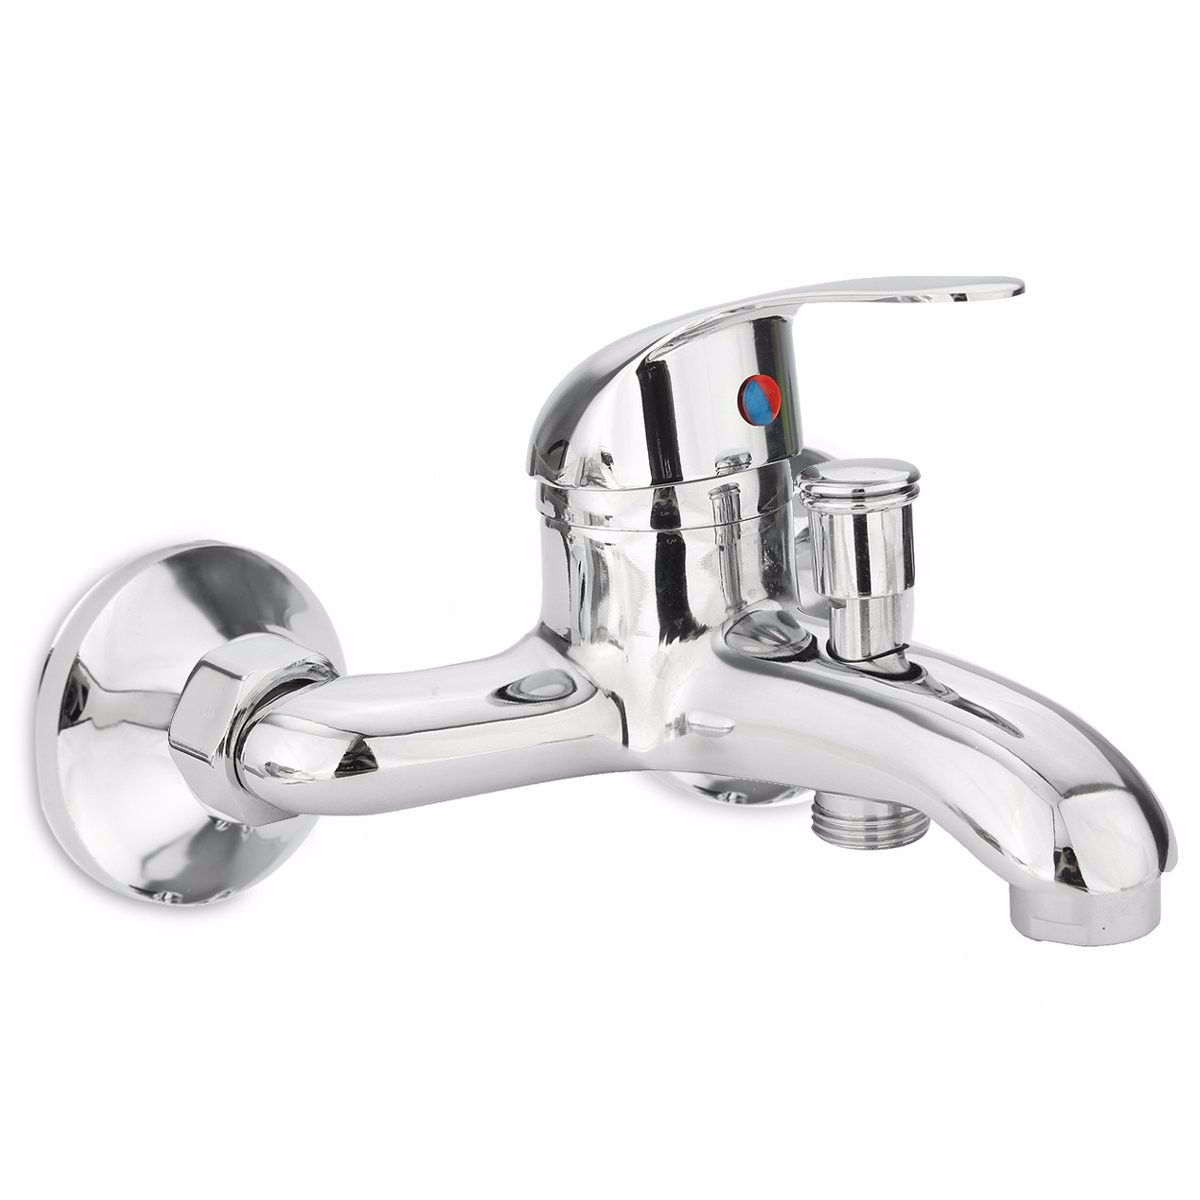 Chrome-Bathroom-Mixer-Faucet-Tap-Bathtub-Shower-Head-Hot-Cold-Mixing-Vavle-Knob-Spout-Wall-Mount-1168200